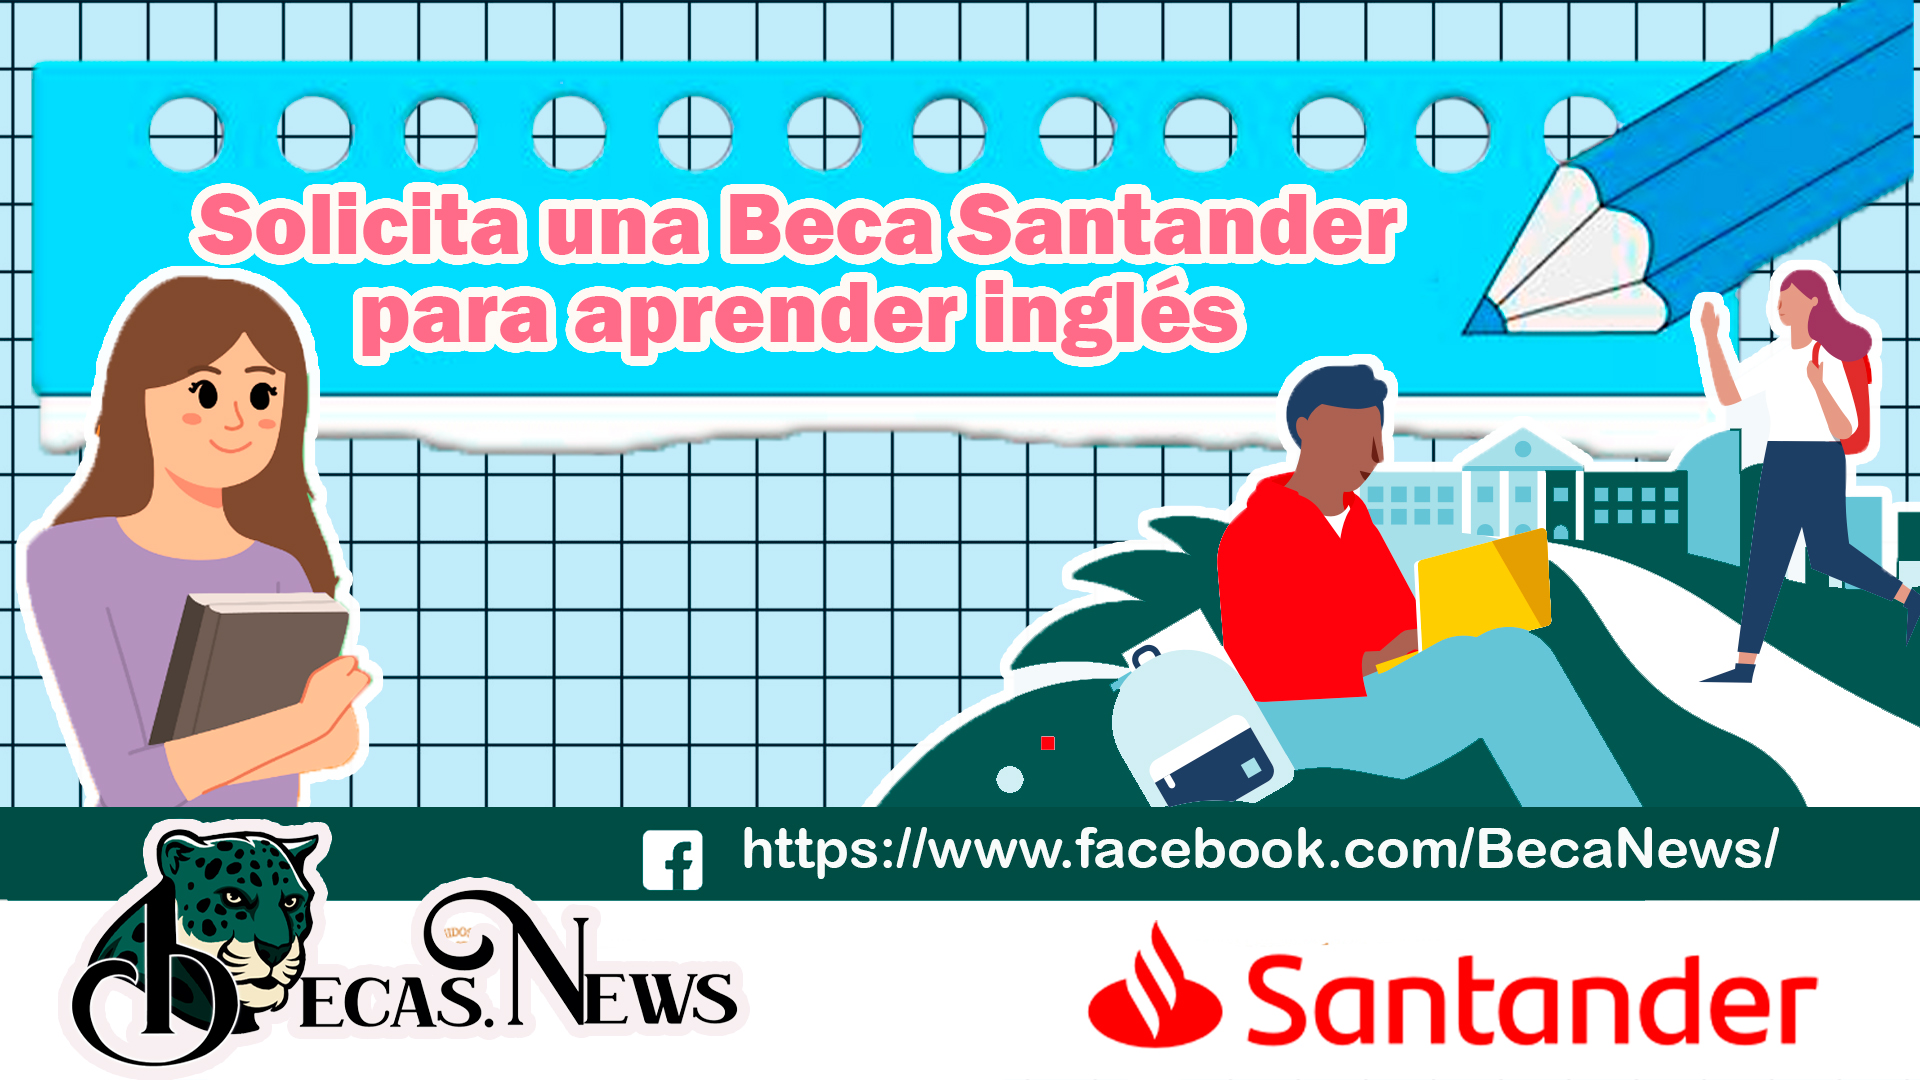 Registrate y obtén una beca Santander para aprender inglés